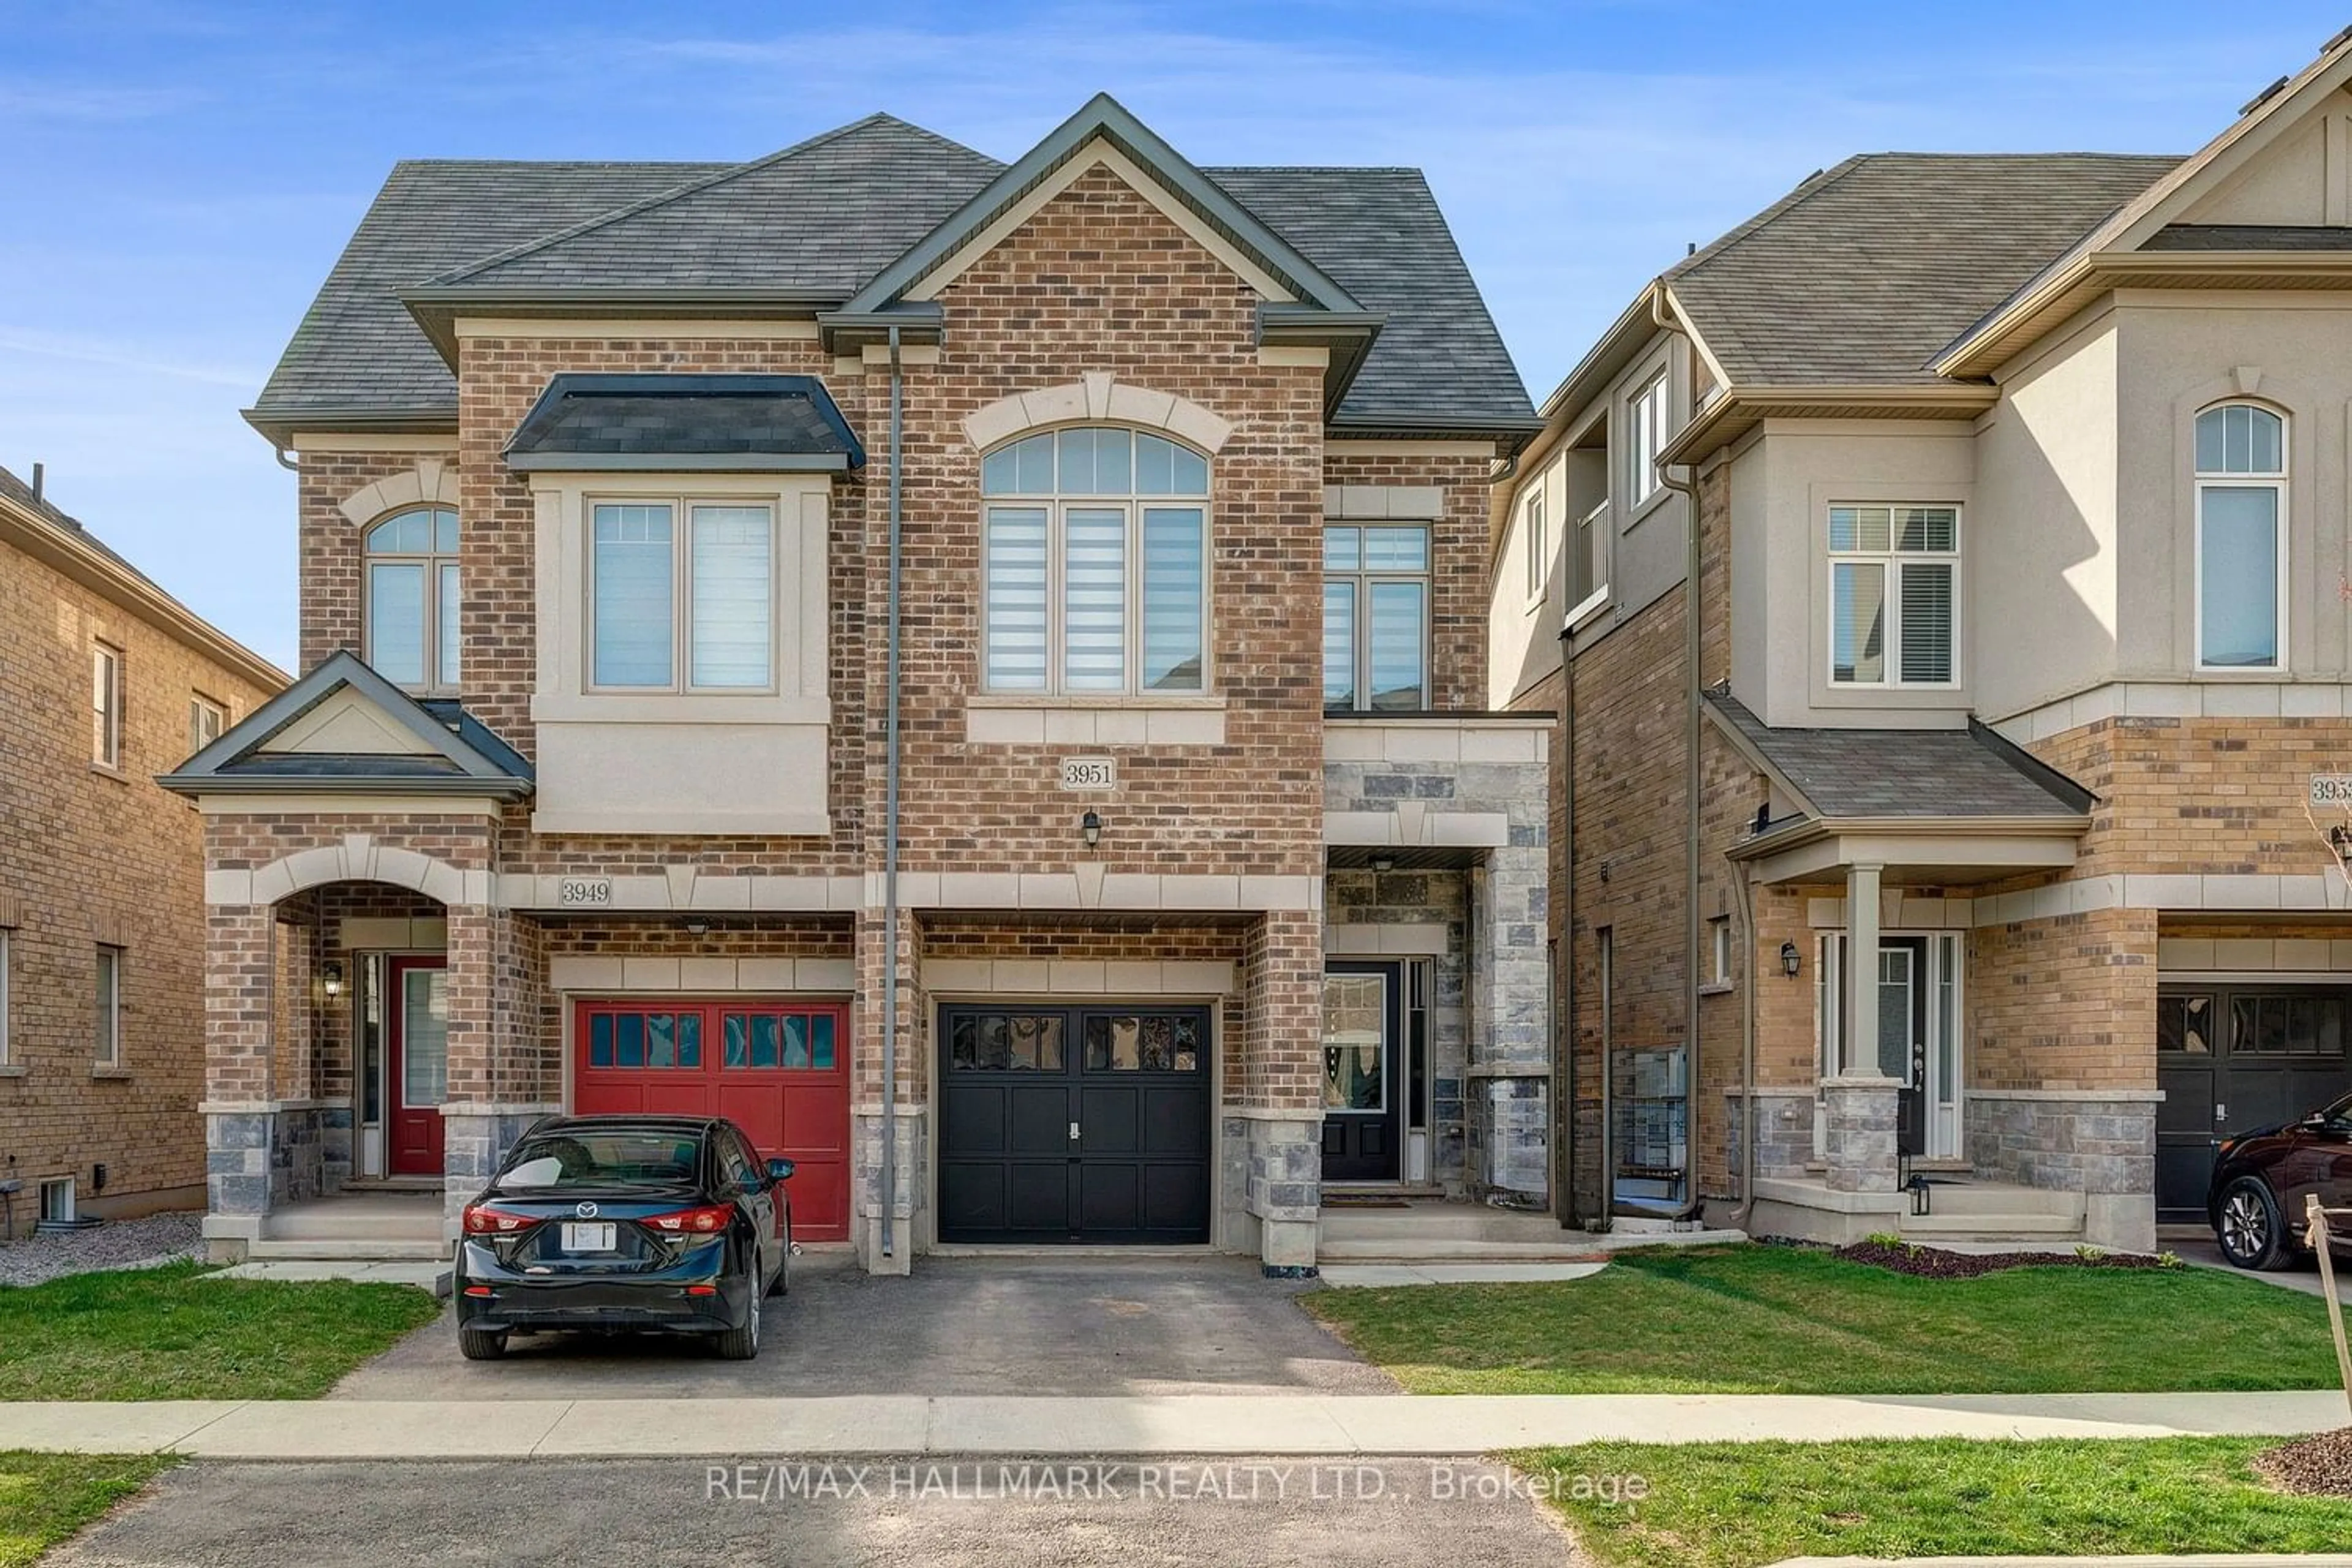 Home with brick exterior material for 3951 Koenig Rd, Burlington Ontario L7M 0Z8